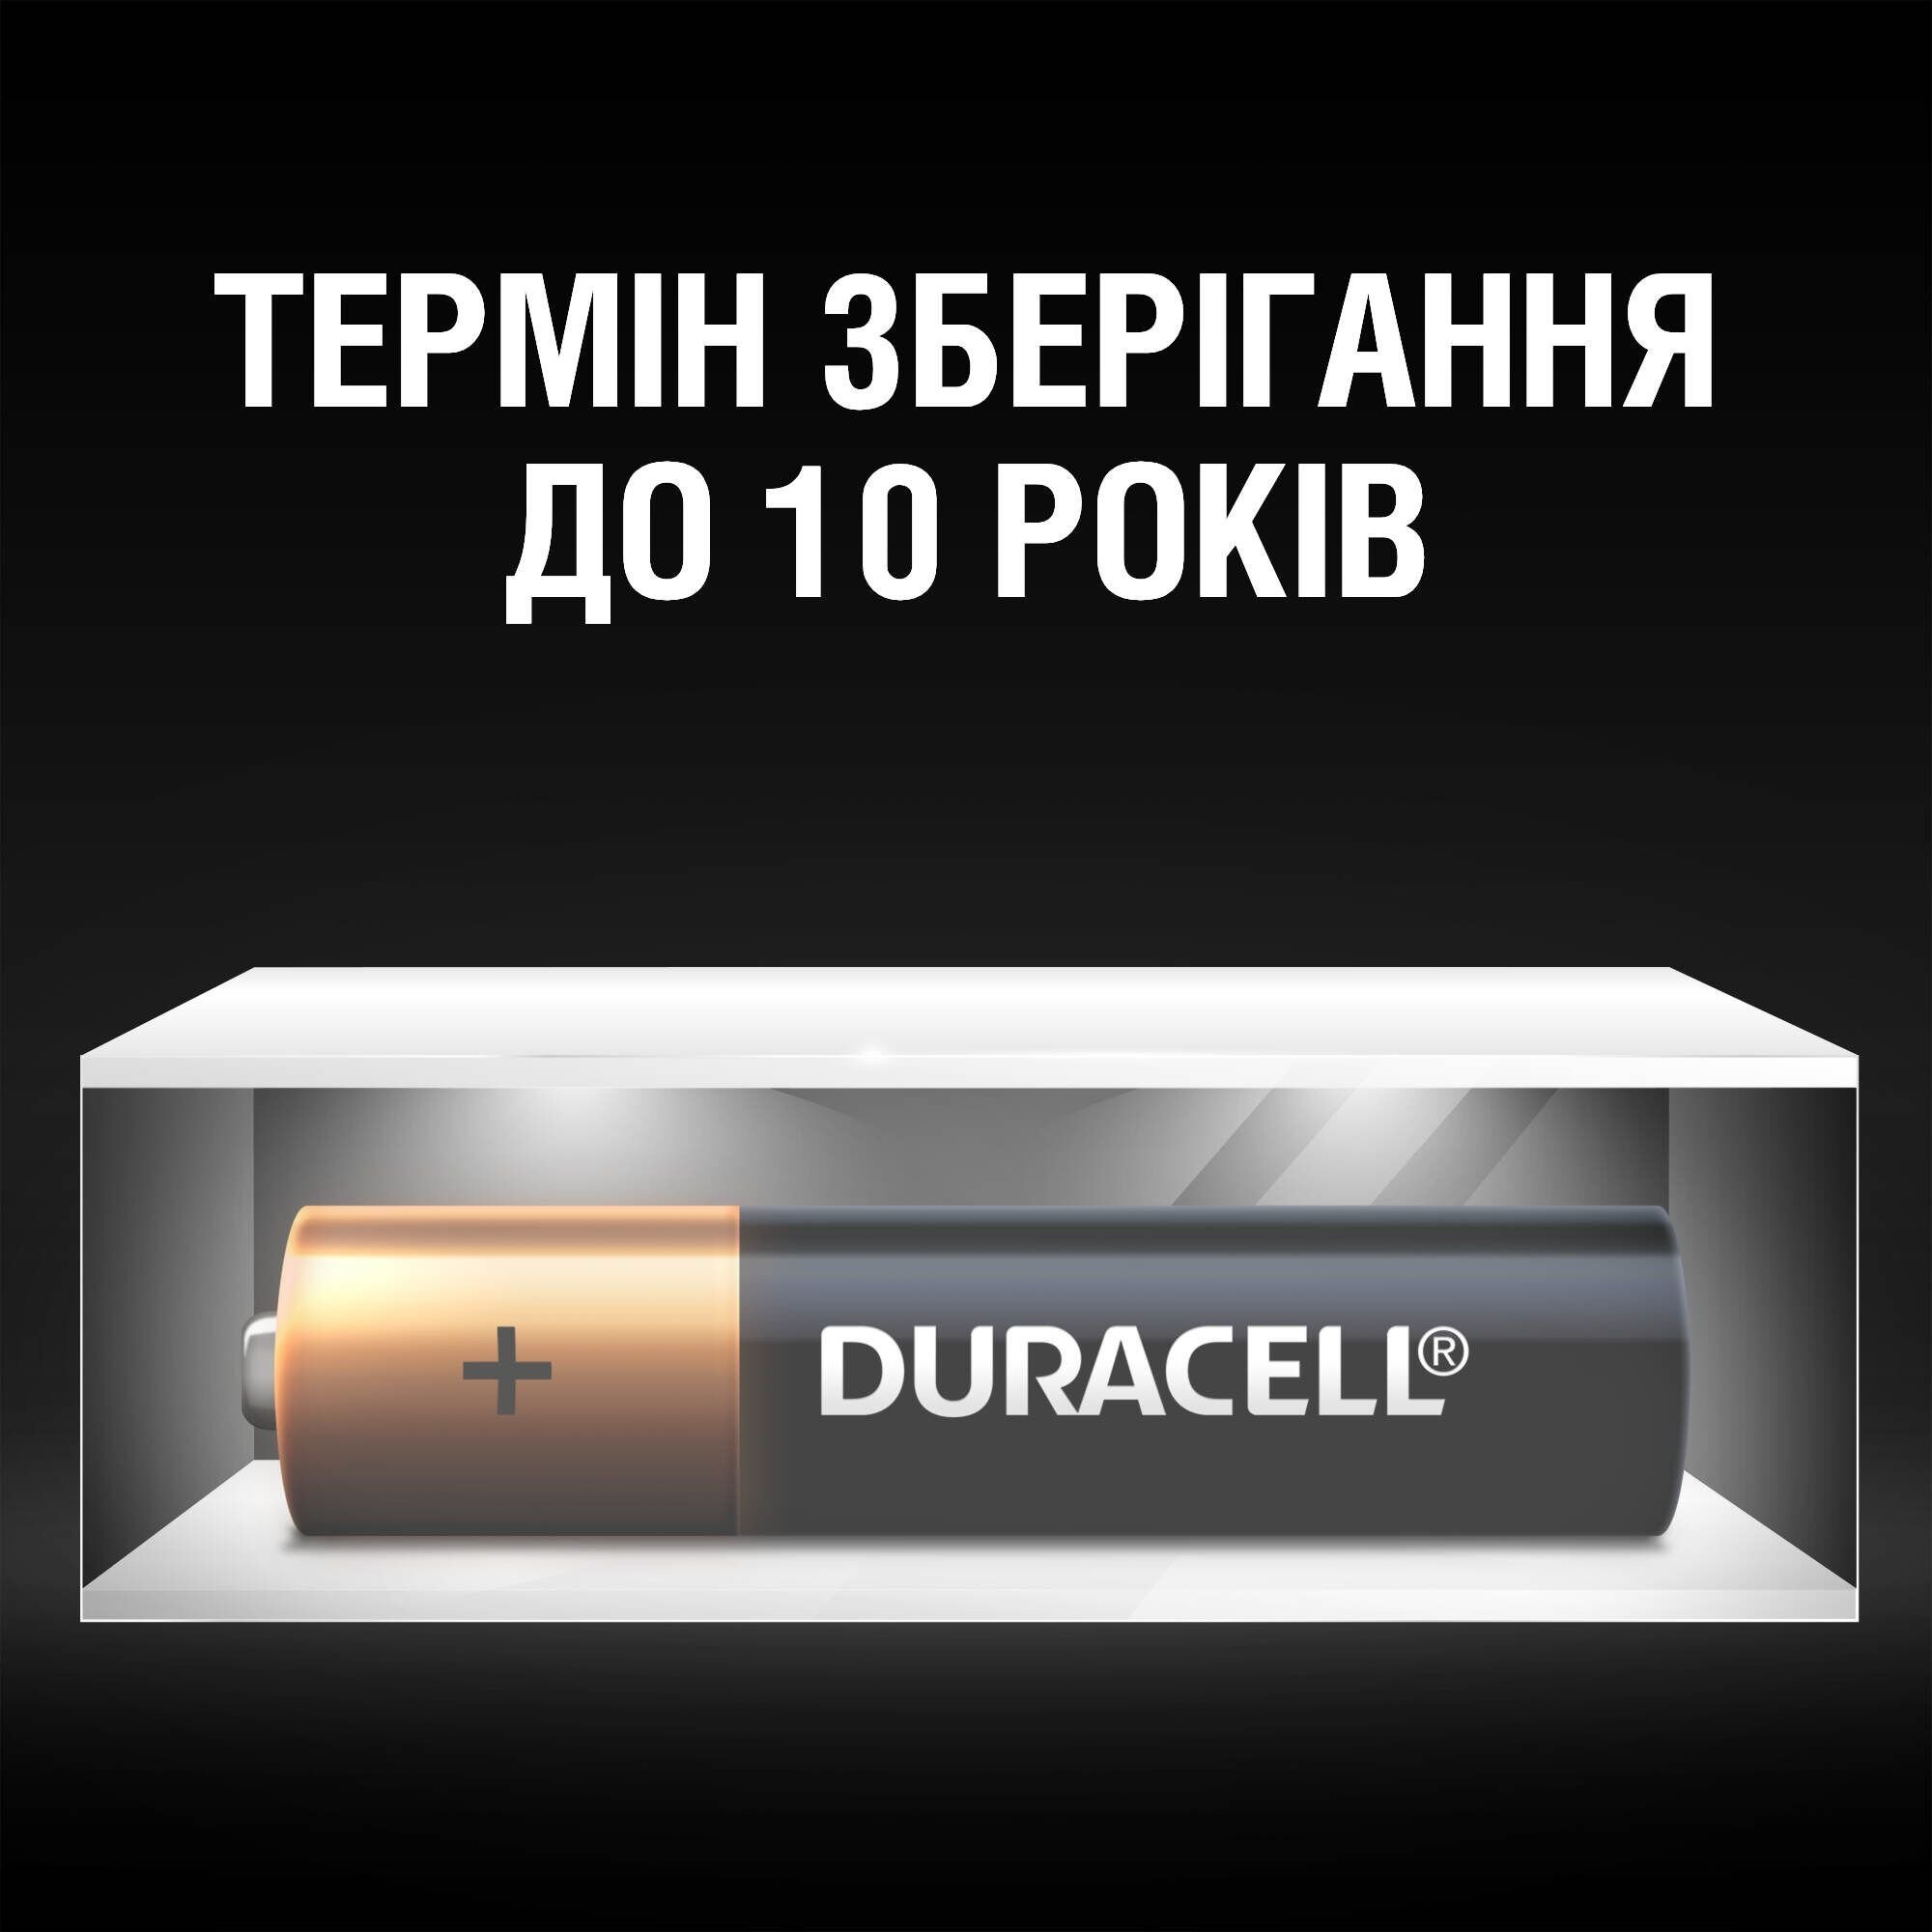 Щелочные батарейки мизинчиковые Duracell 1.5 V AAA LR03/MN2400, 18 шт. (737056) - фото 6